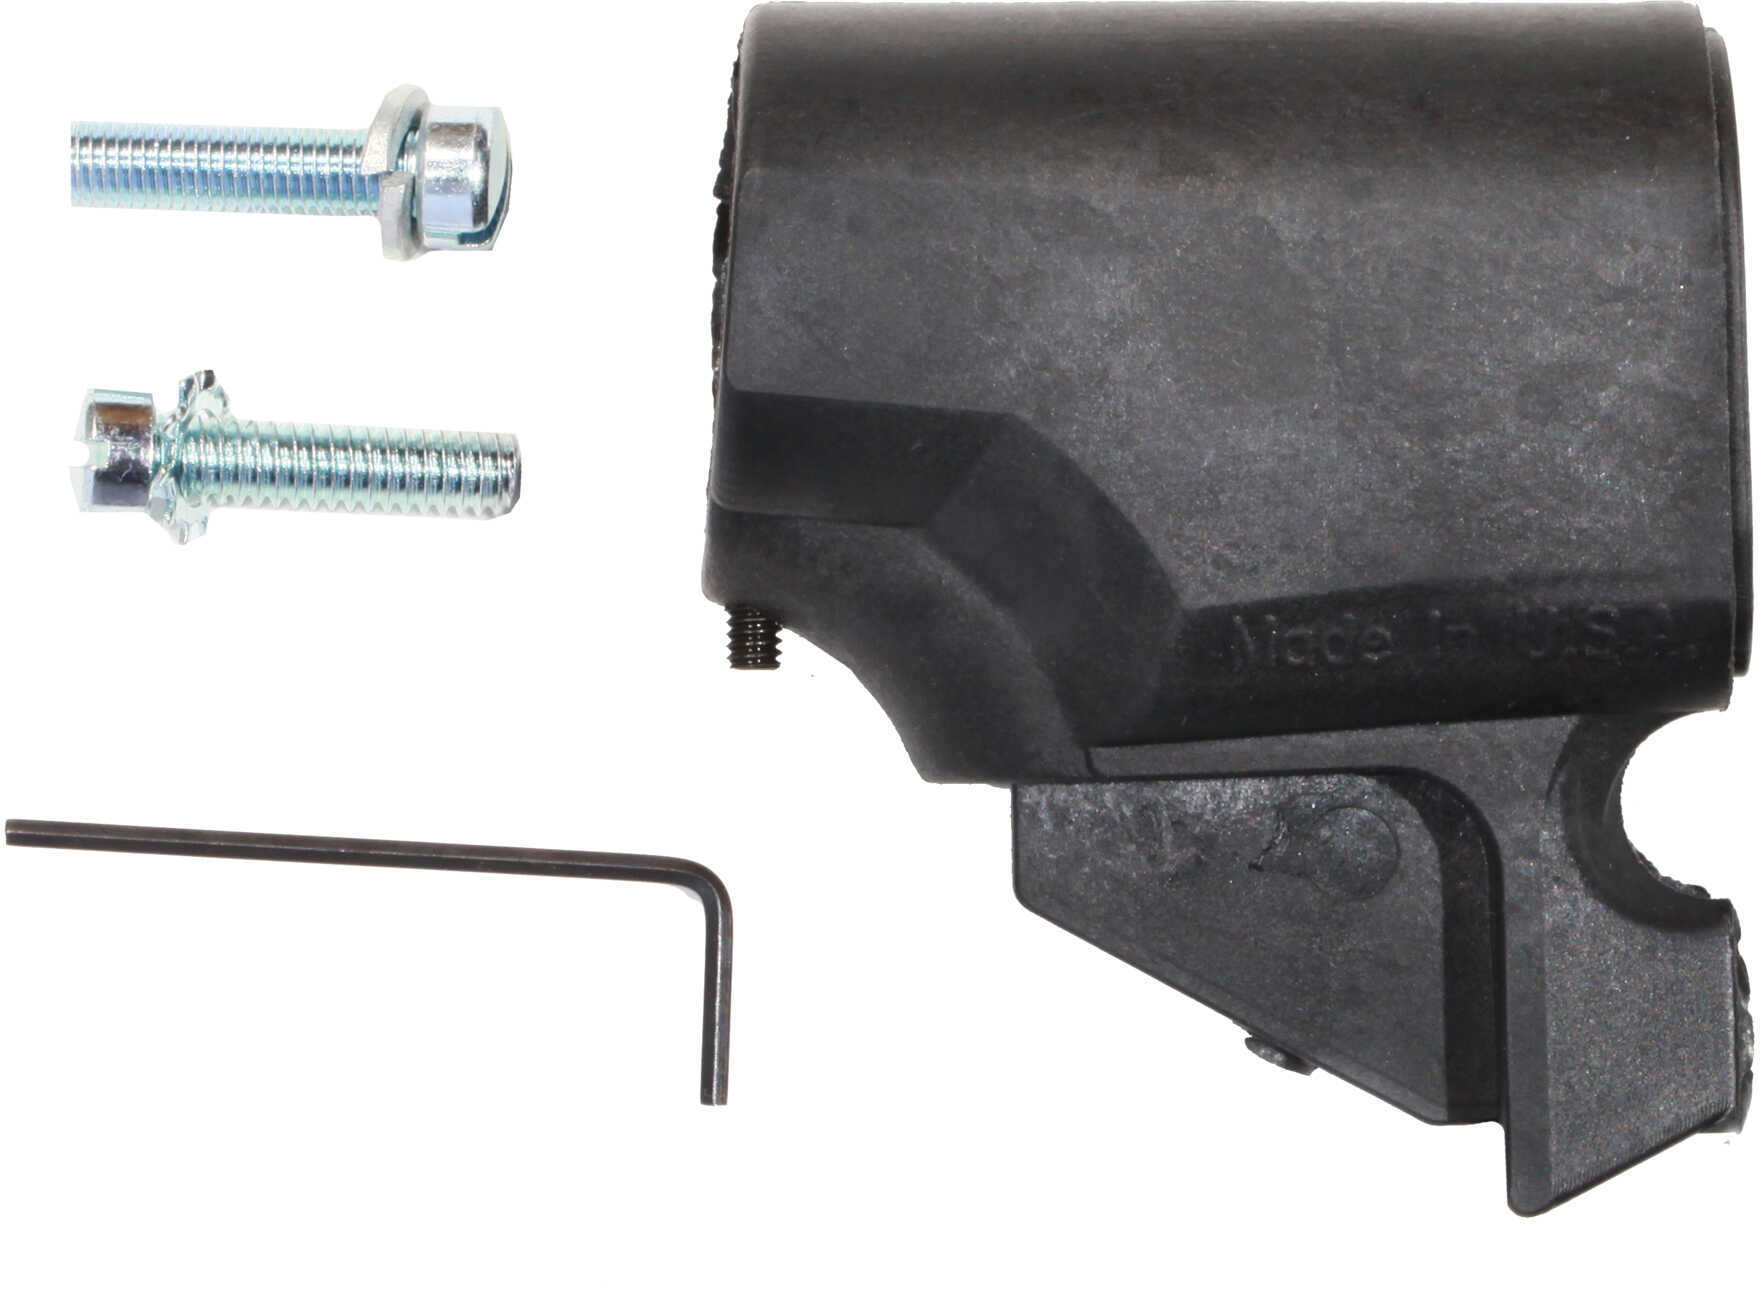 Ergo Grip Tactical Stock Adapter Fits Remington 870 12 Gauge Polymer Black Finish